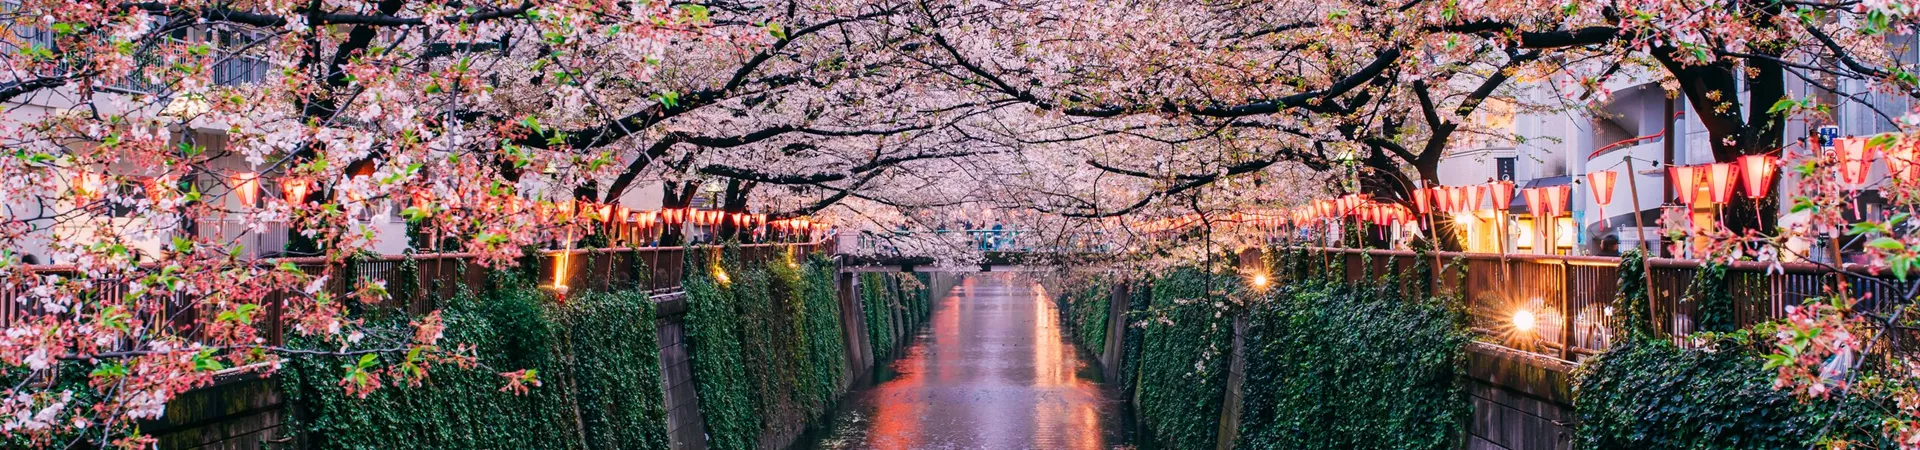 Sakura Blooming At Meguro River, Tokyo in Japan during the cherry blossom season